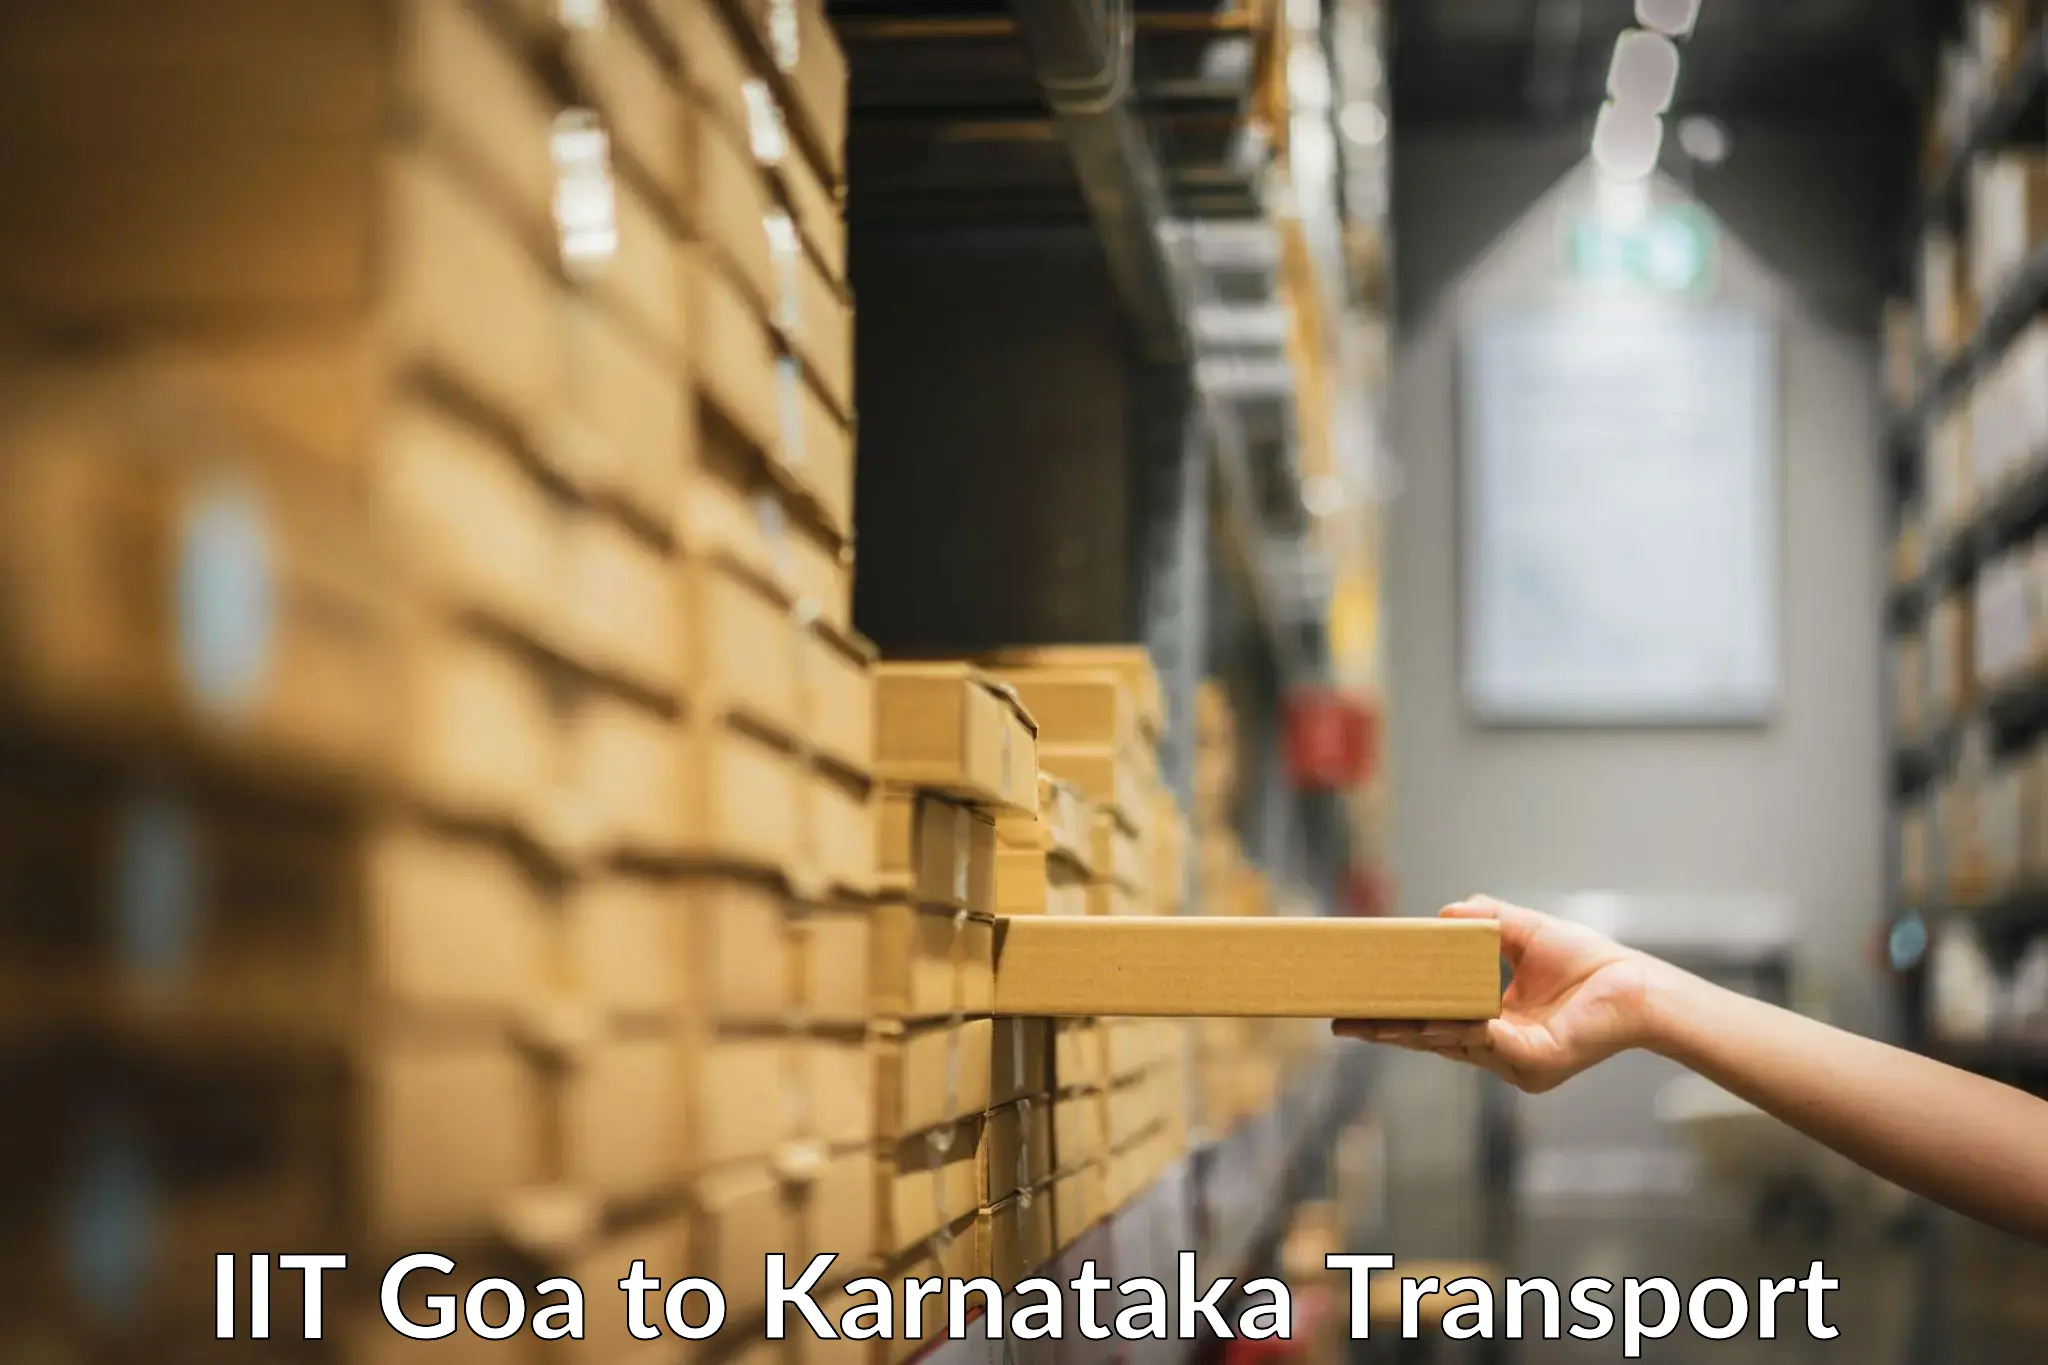 Shipping partner IIT Goa to Karnataka